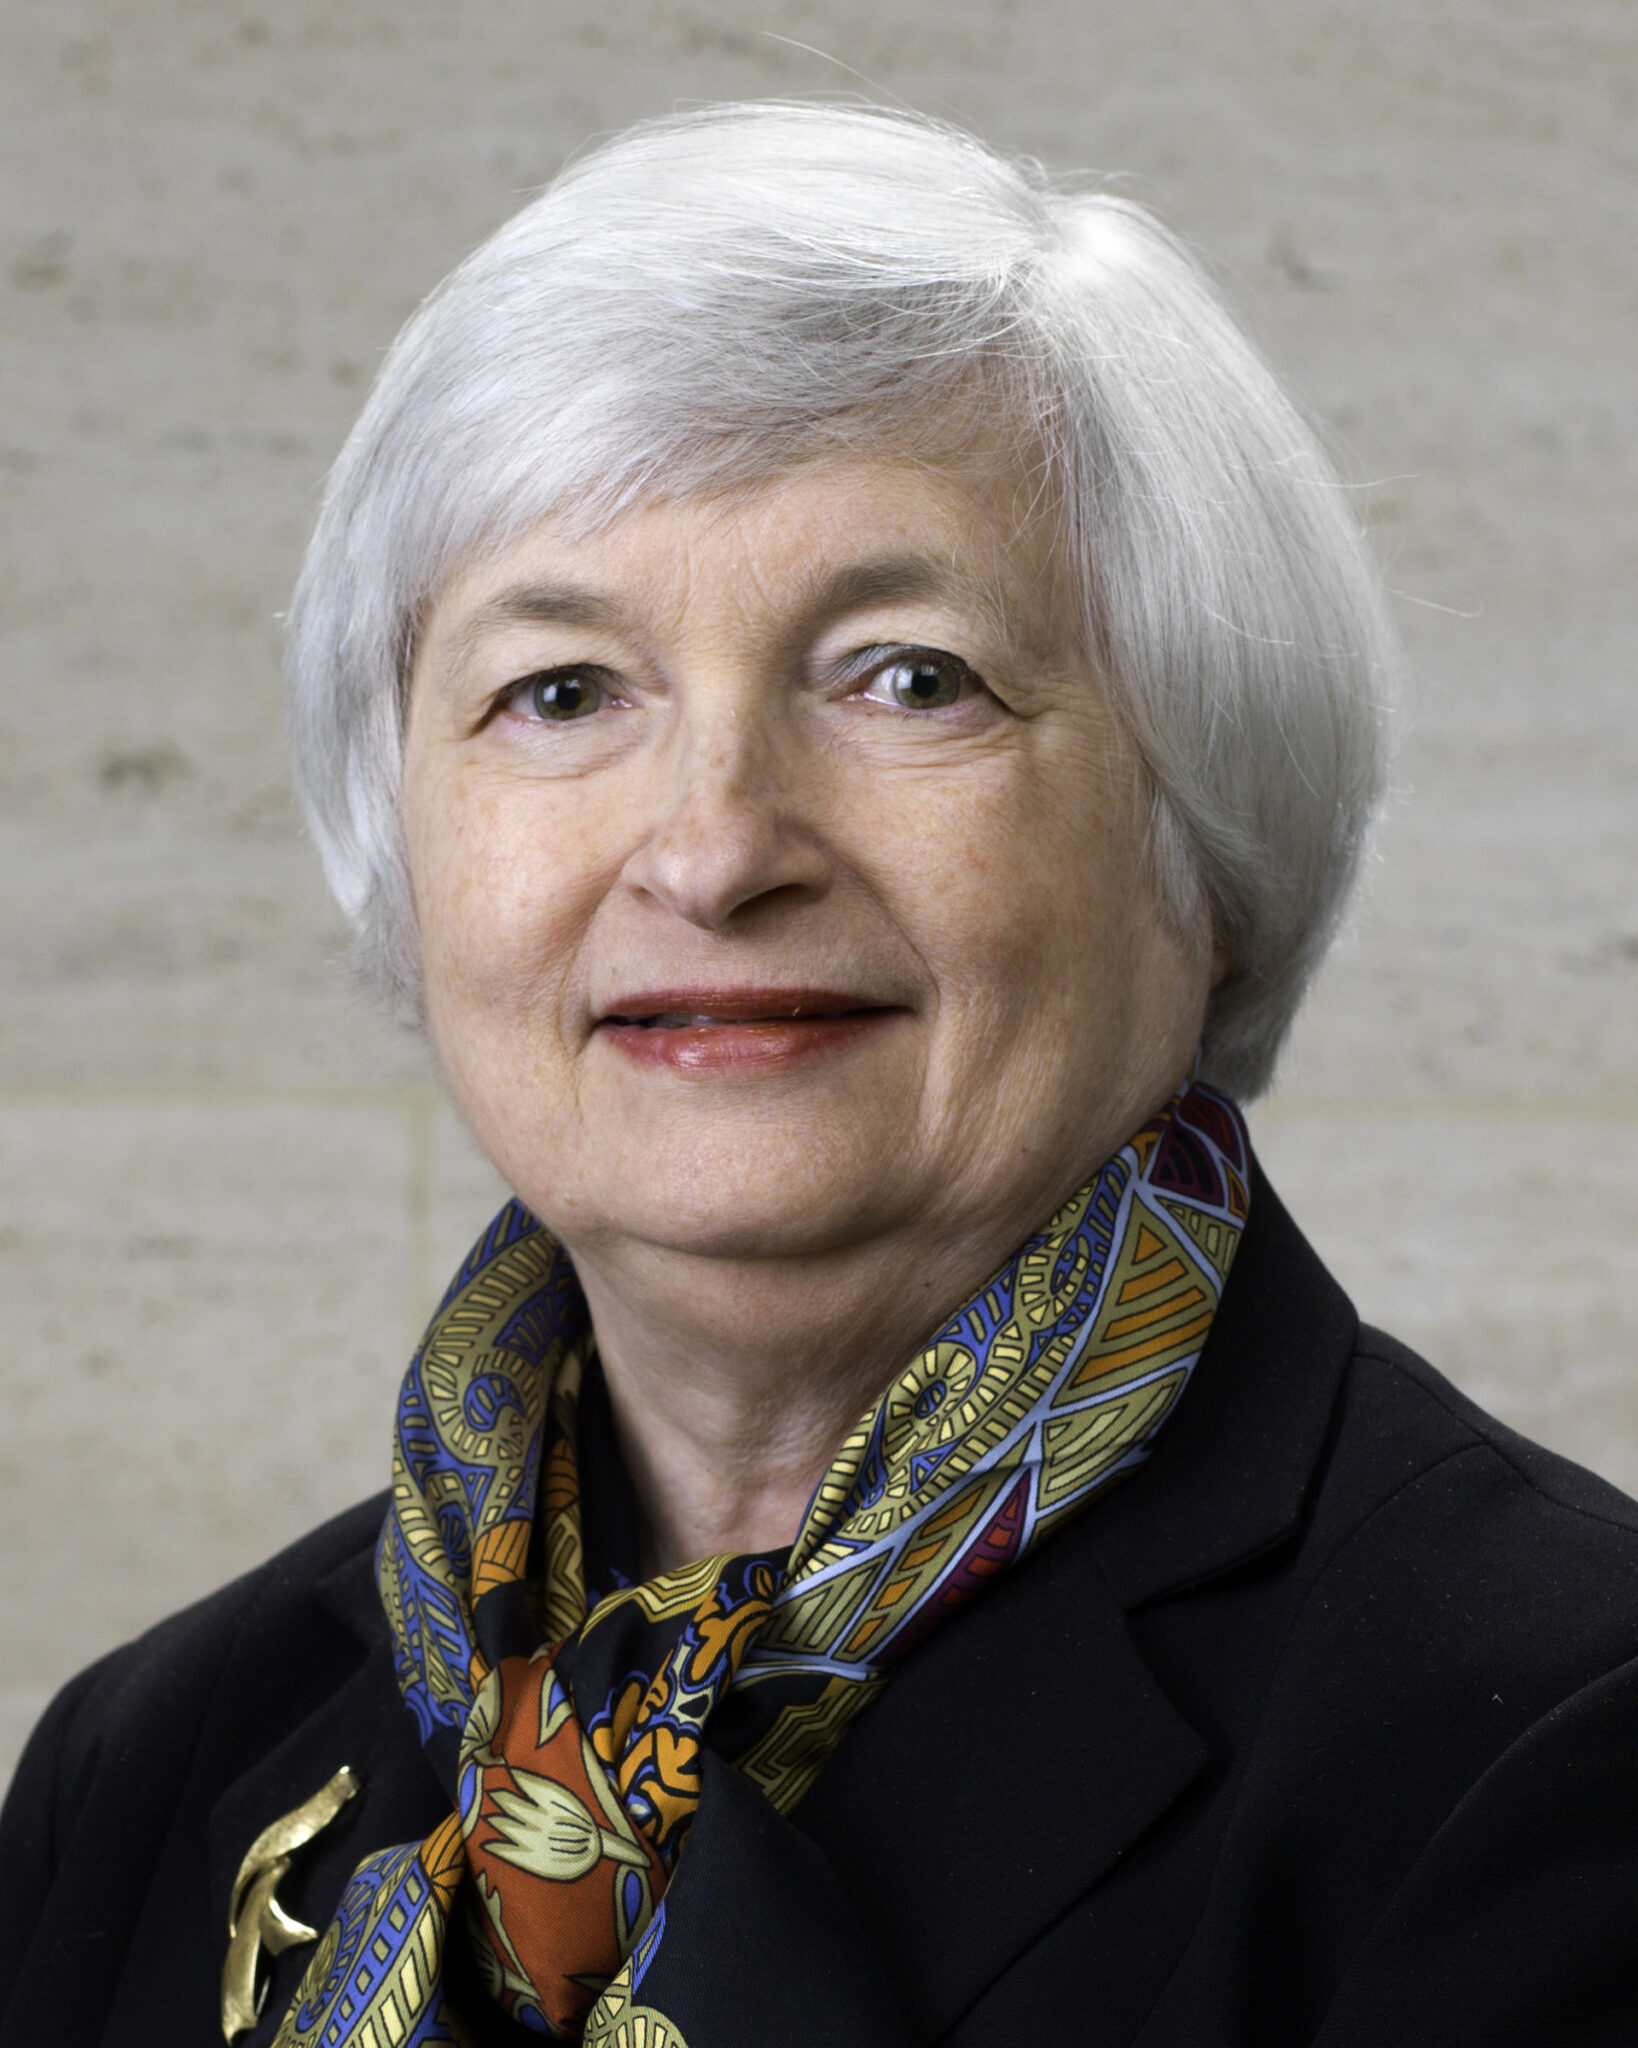 Treasury Secretary Janet Yellen to speak on banking crisis at SOM on Monday